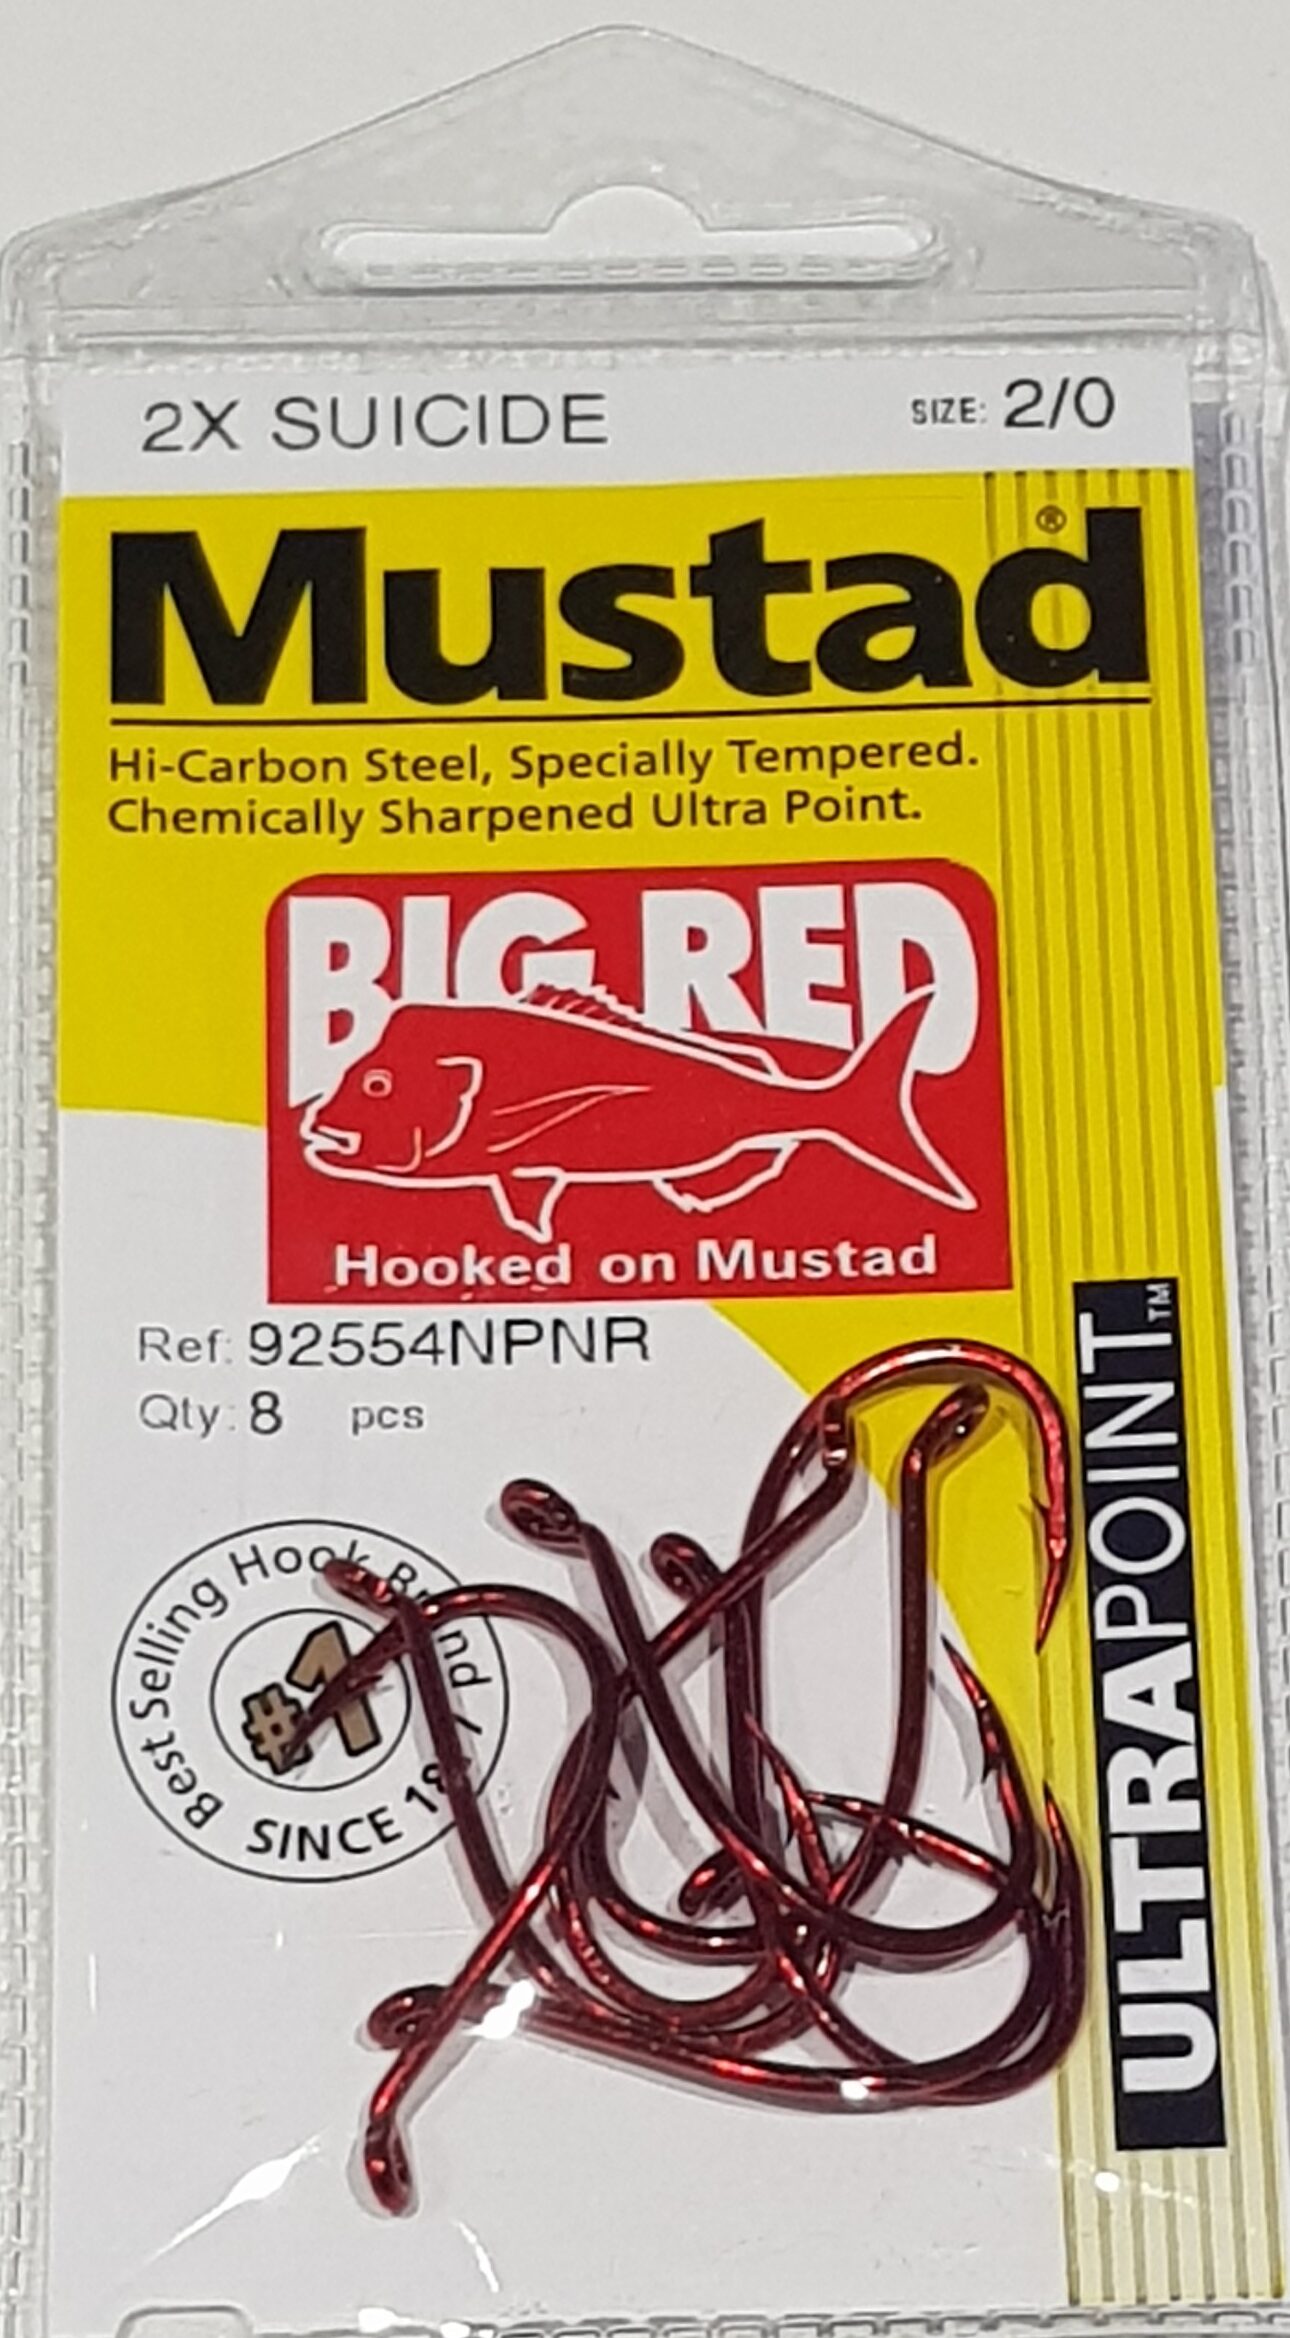 Mustad Big Red Suicide Fishing Hooks 2/0 – Online Fishen Supplies